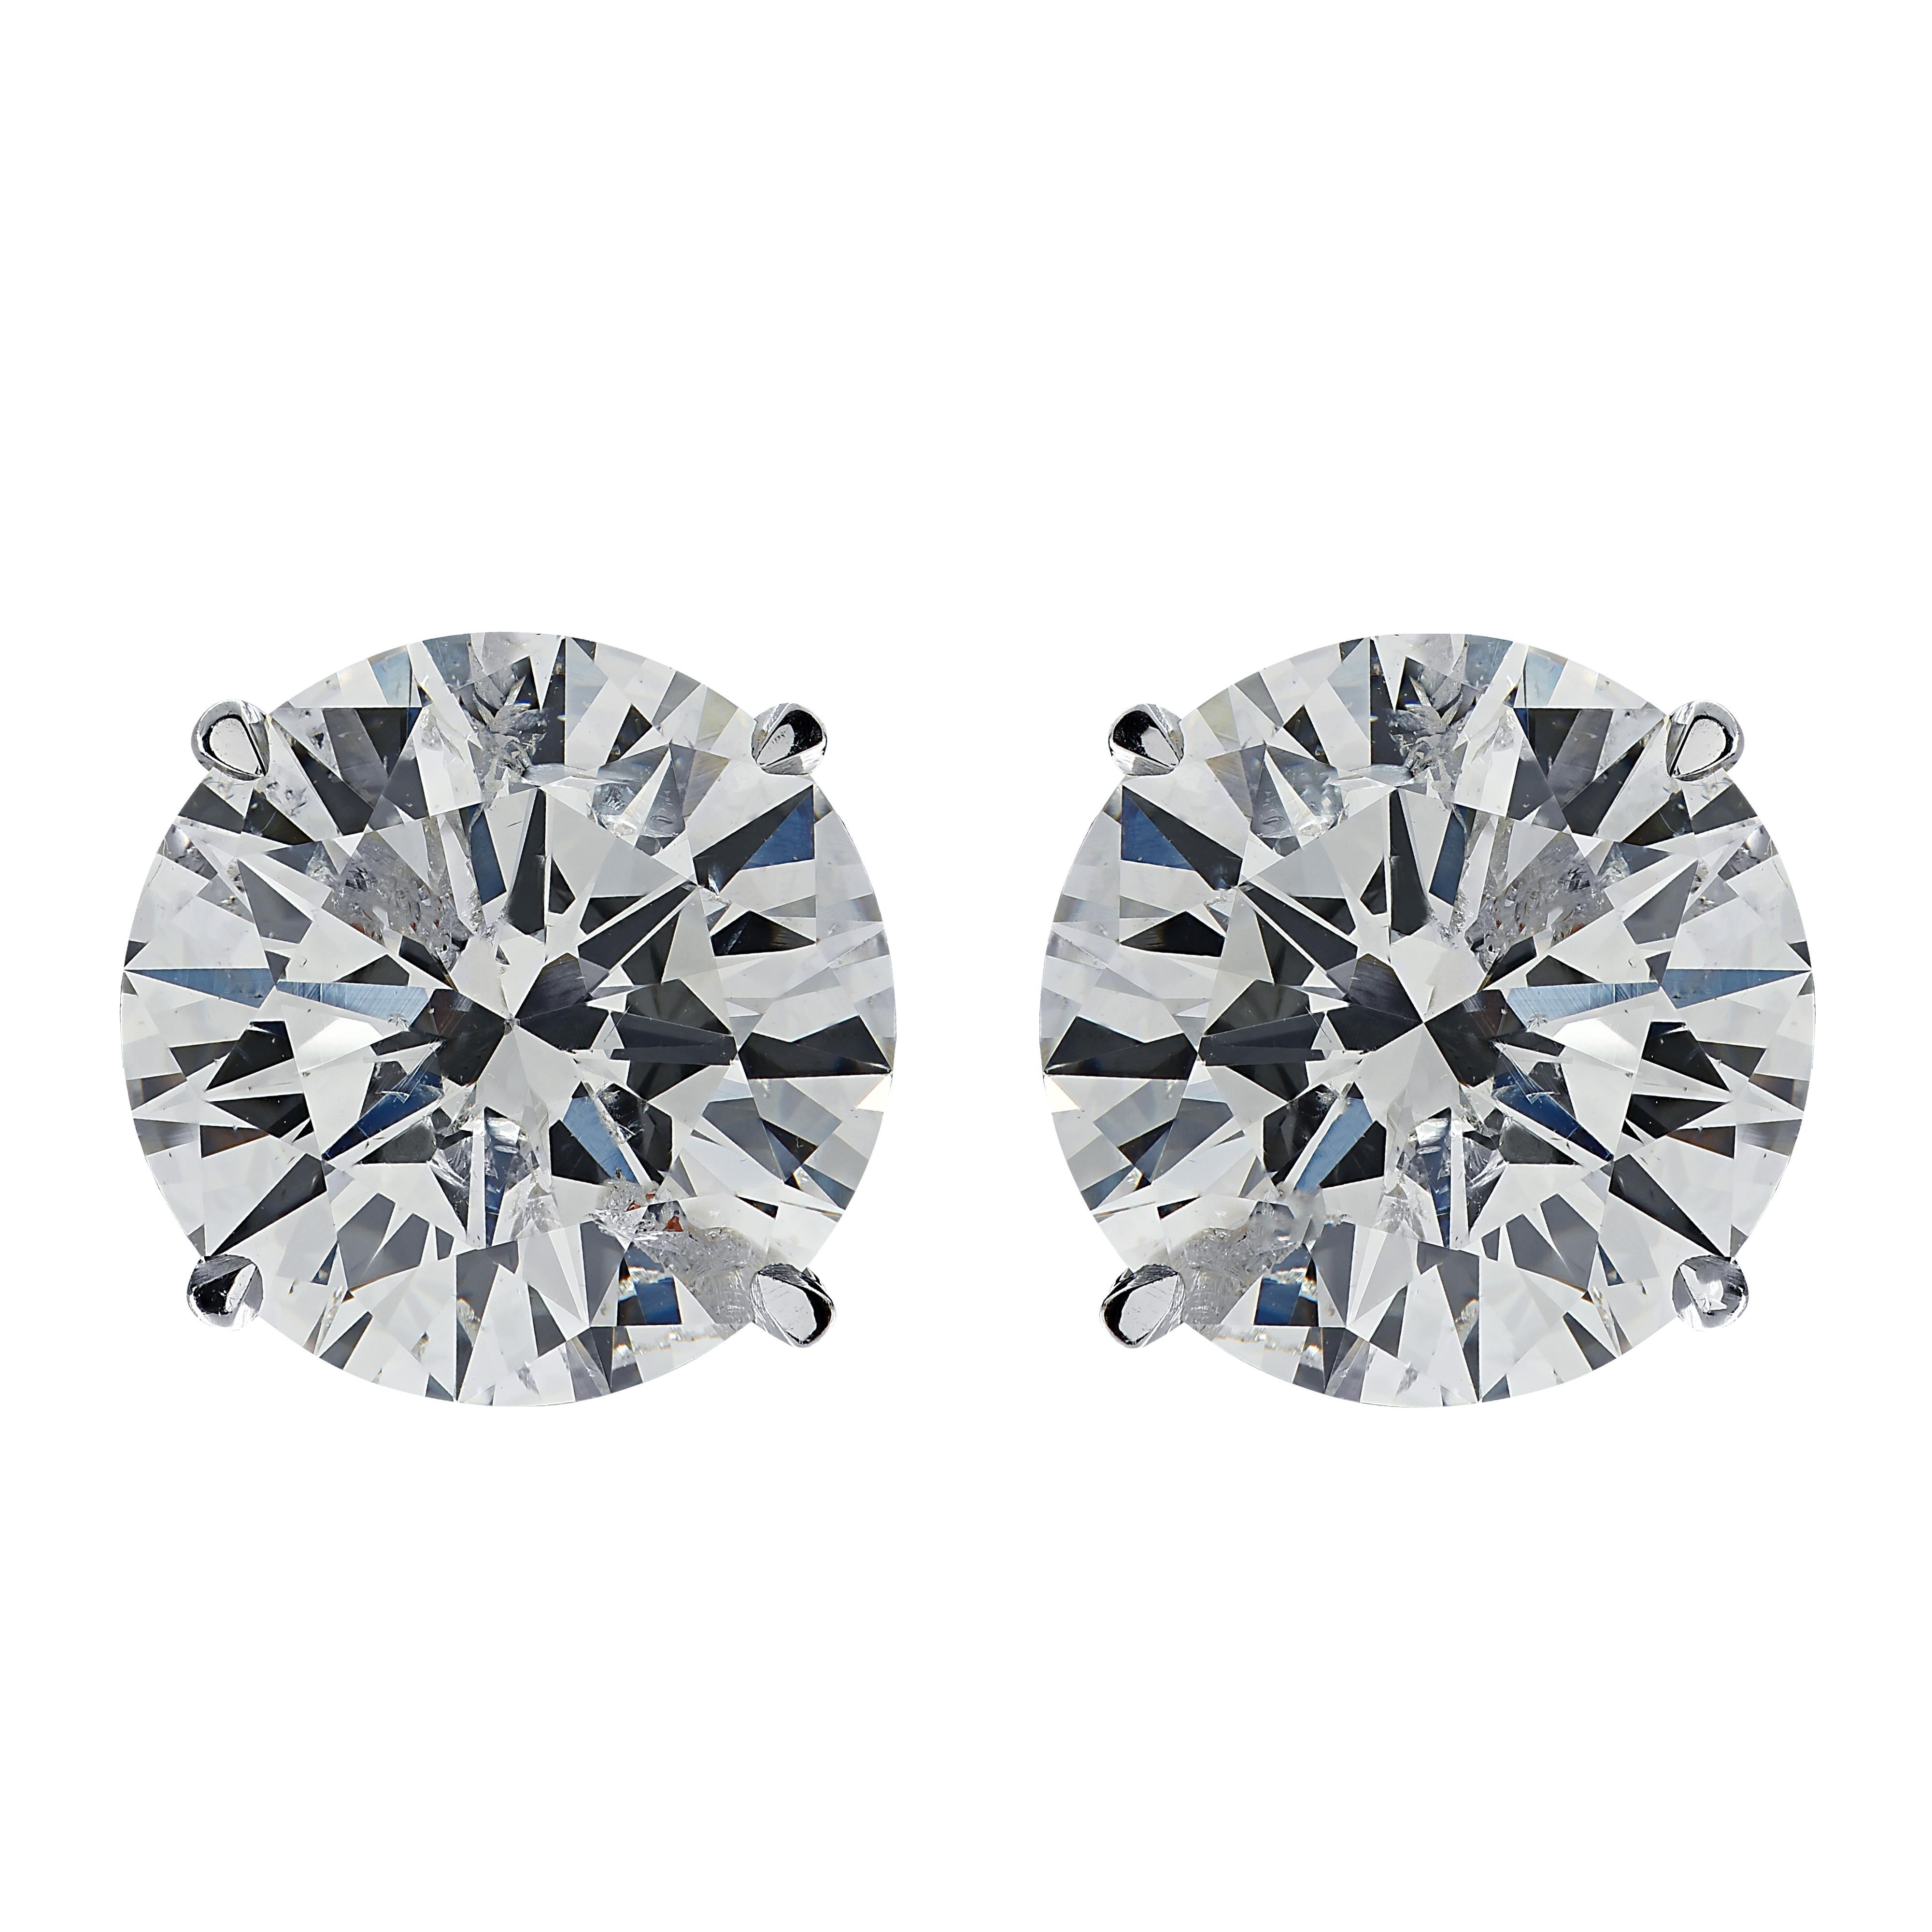 Vivid Diamonds 6.05 Carat Diamond Solitaire Stud Earrings In New Condition For Sale In Miami, FL